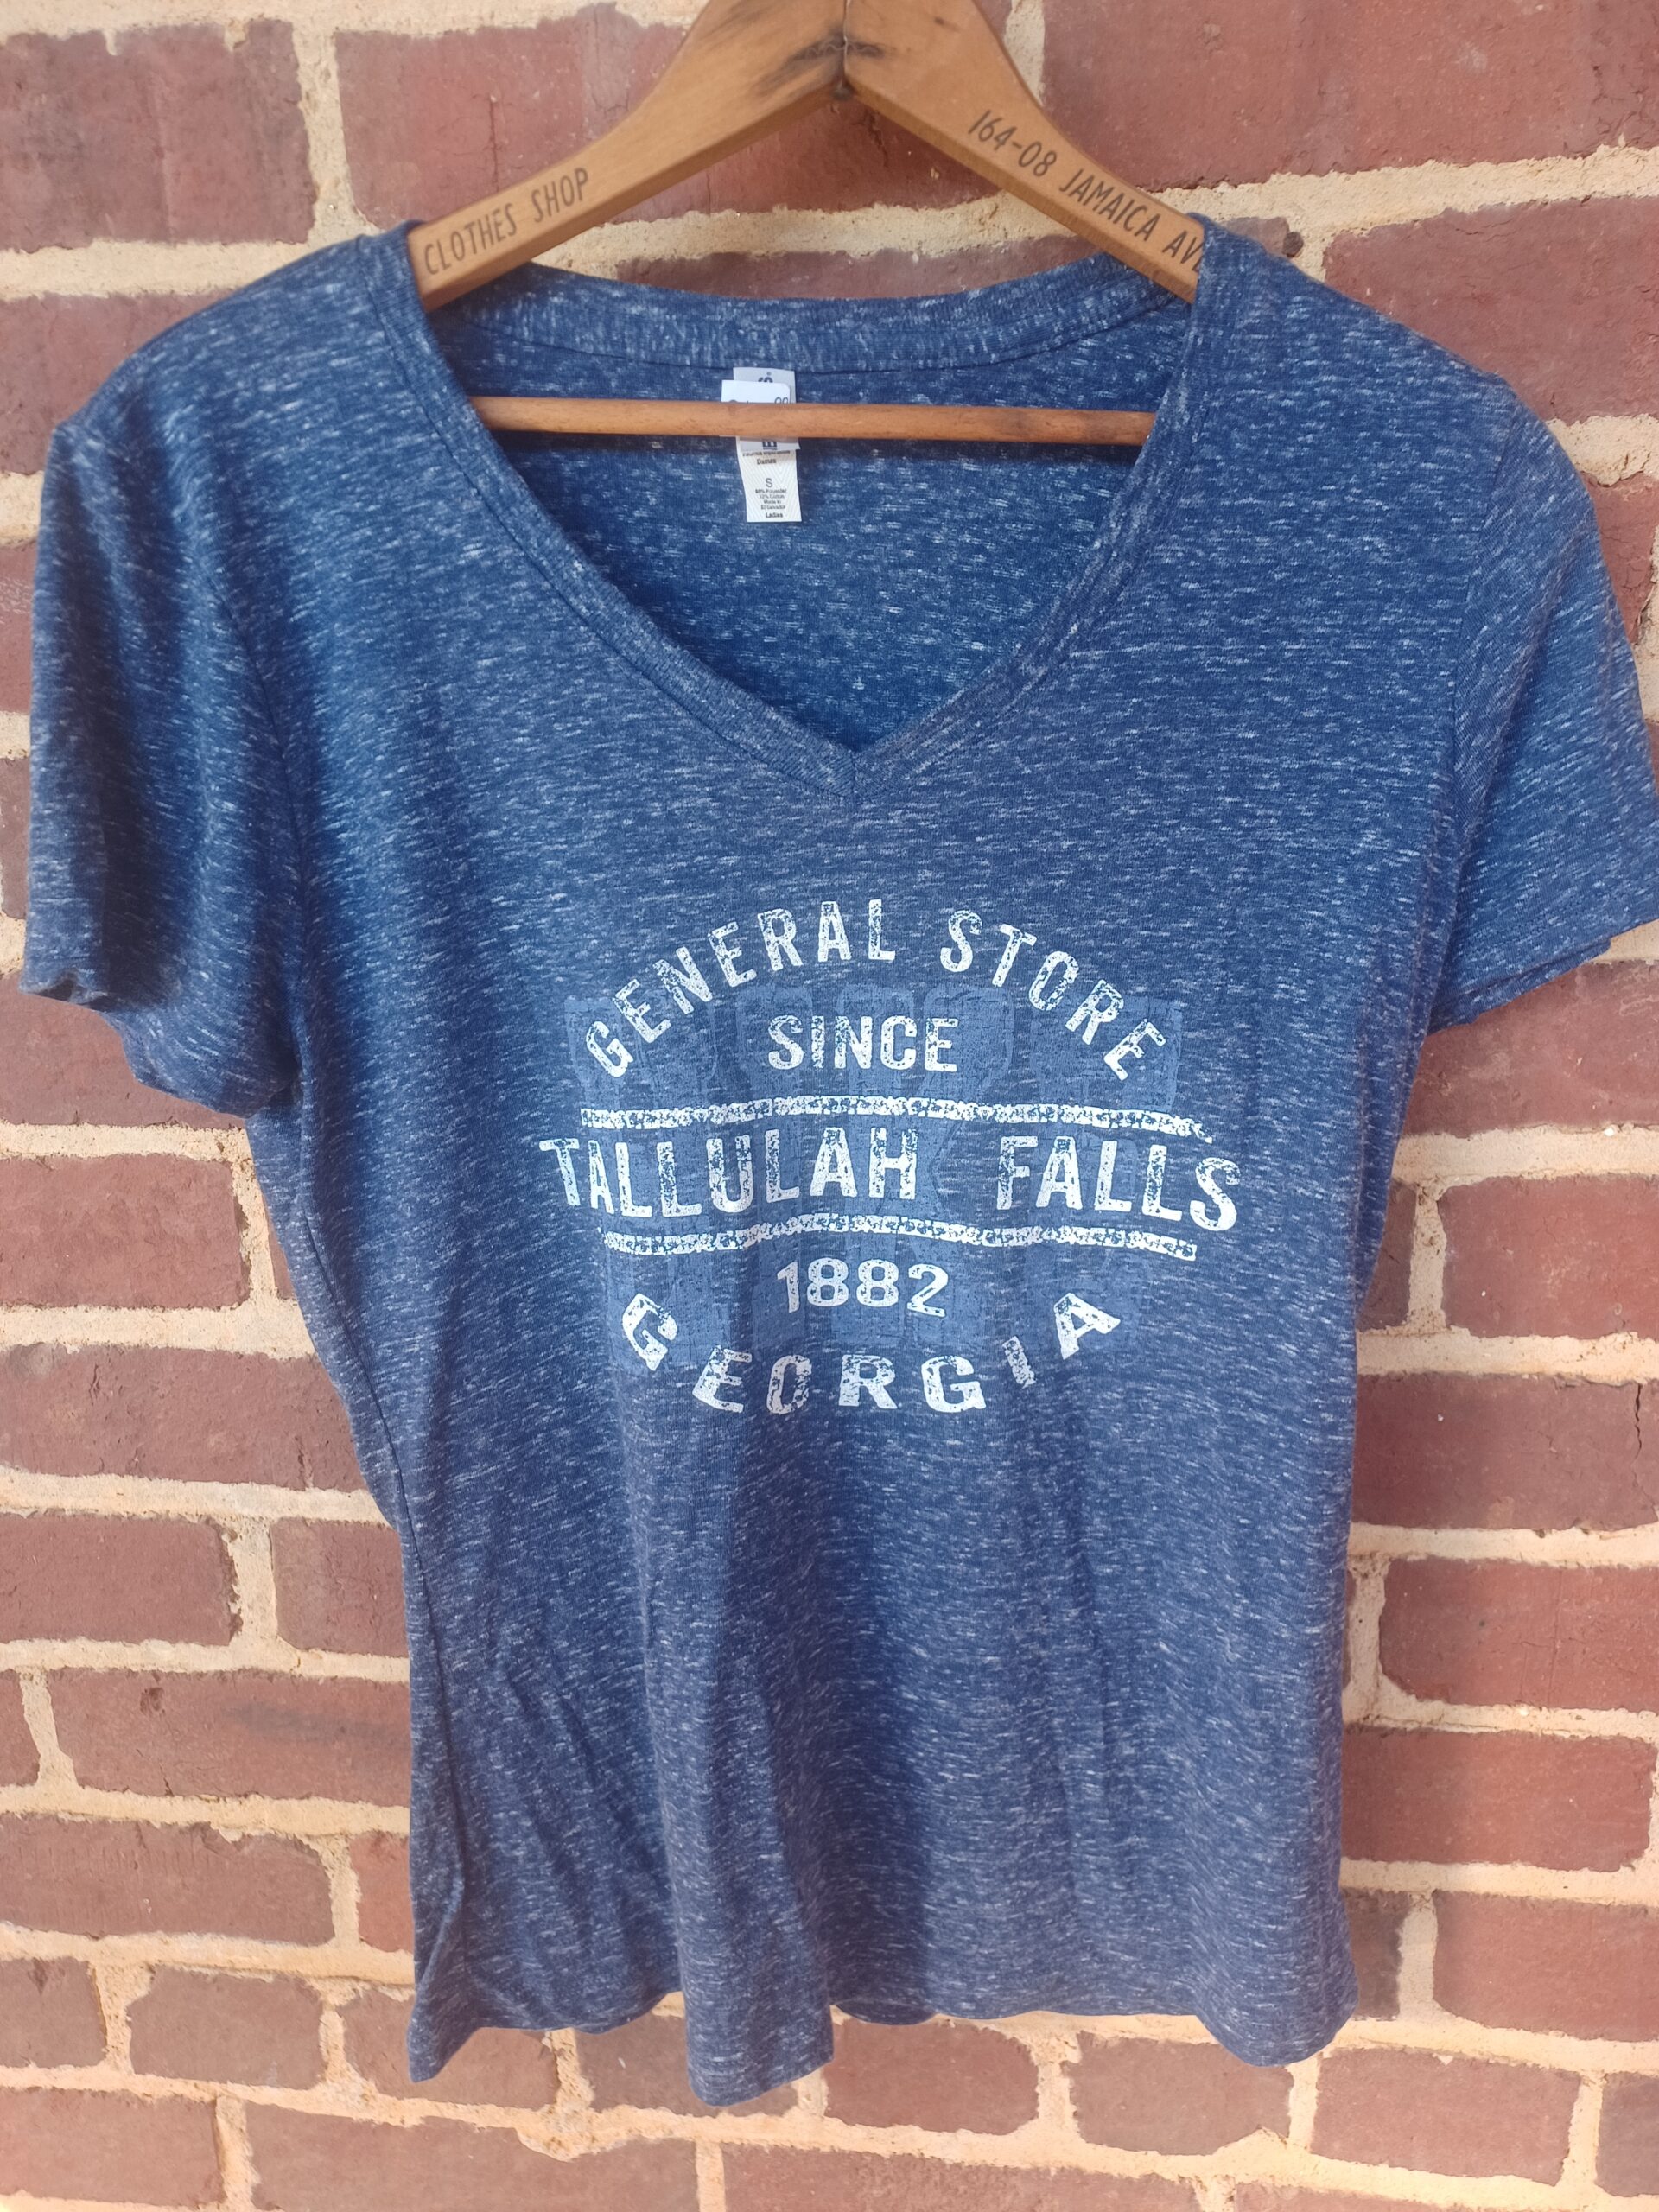 General Store T-Shirt - Blue - The General Store Tallulah Falls